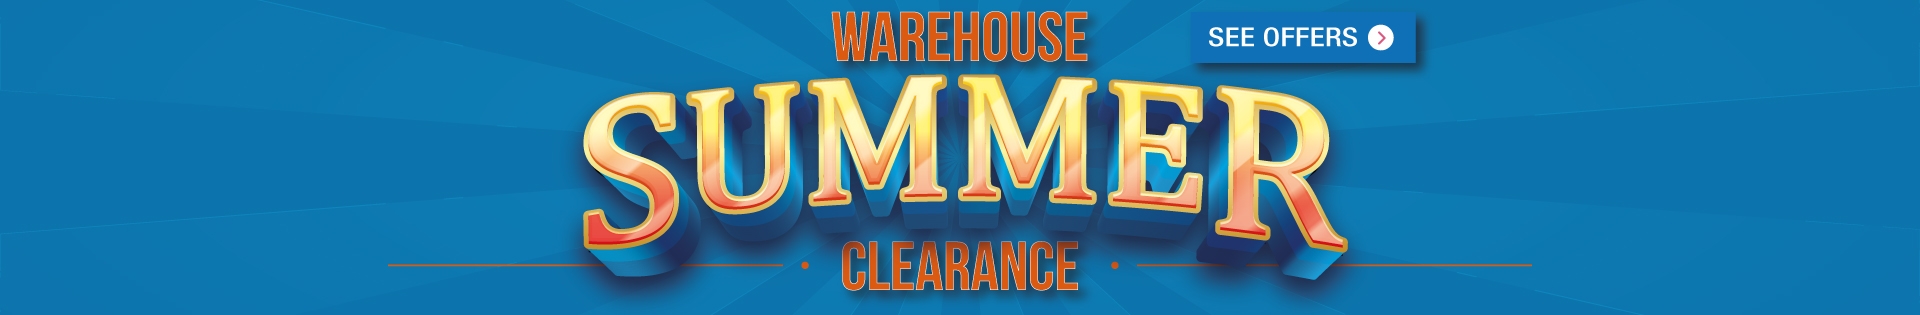 Warehouse Summer Clearance 